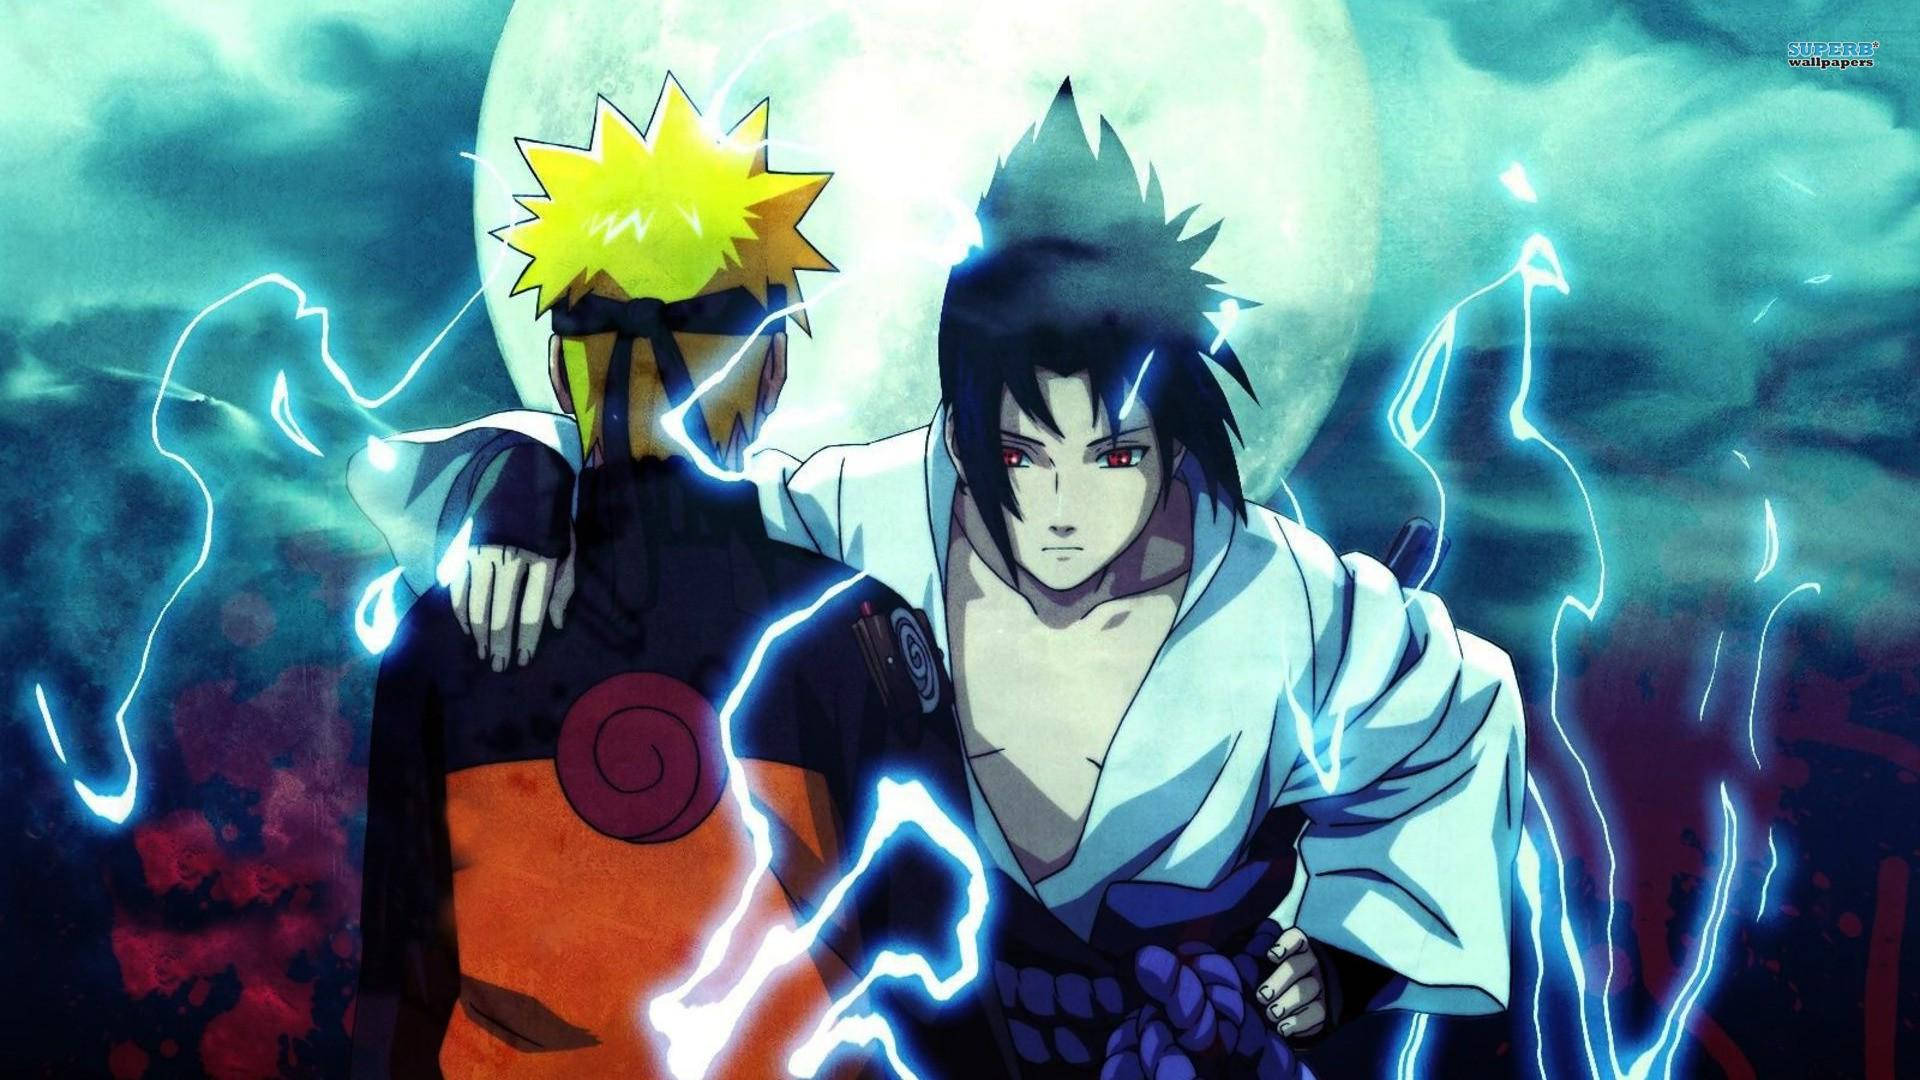 Naruto and Sasuke, locked in an epic battle. Wallpaper